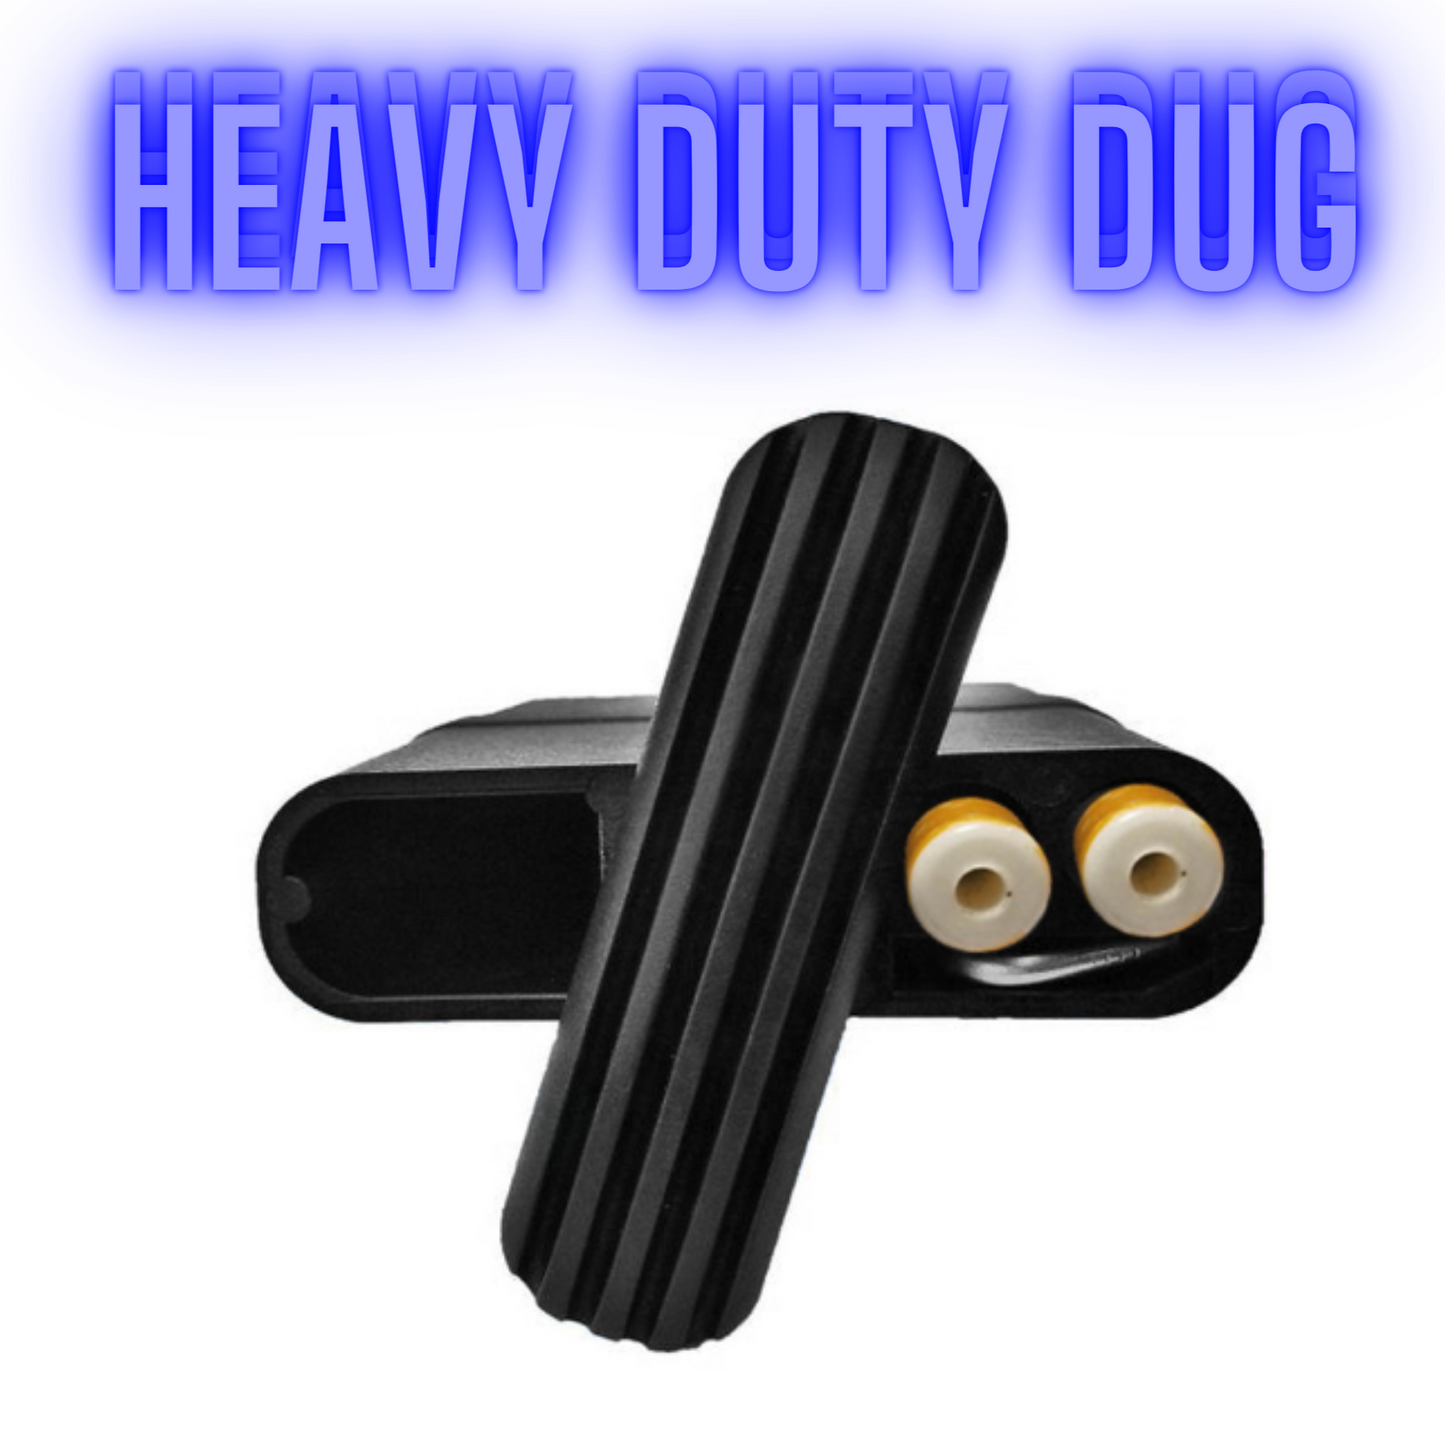 Heavy Duty Dug